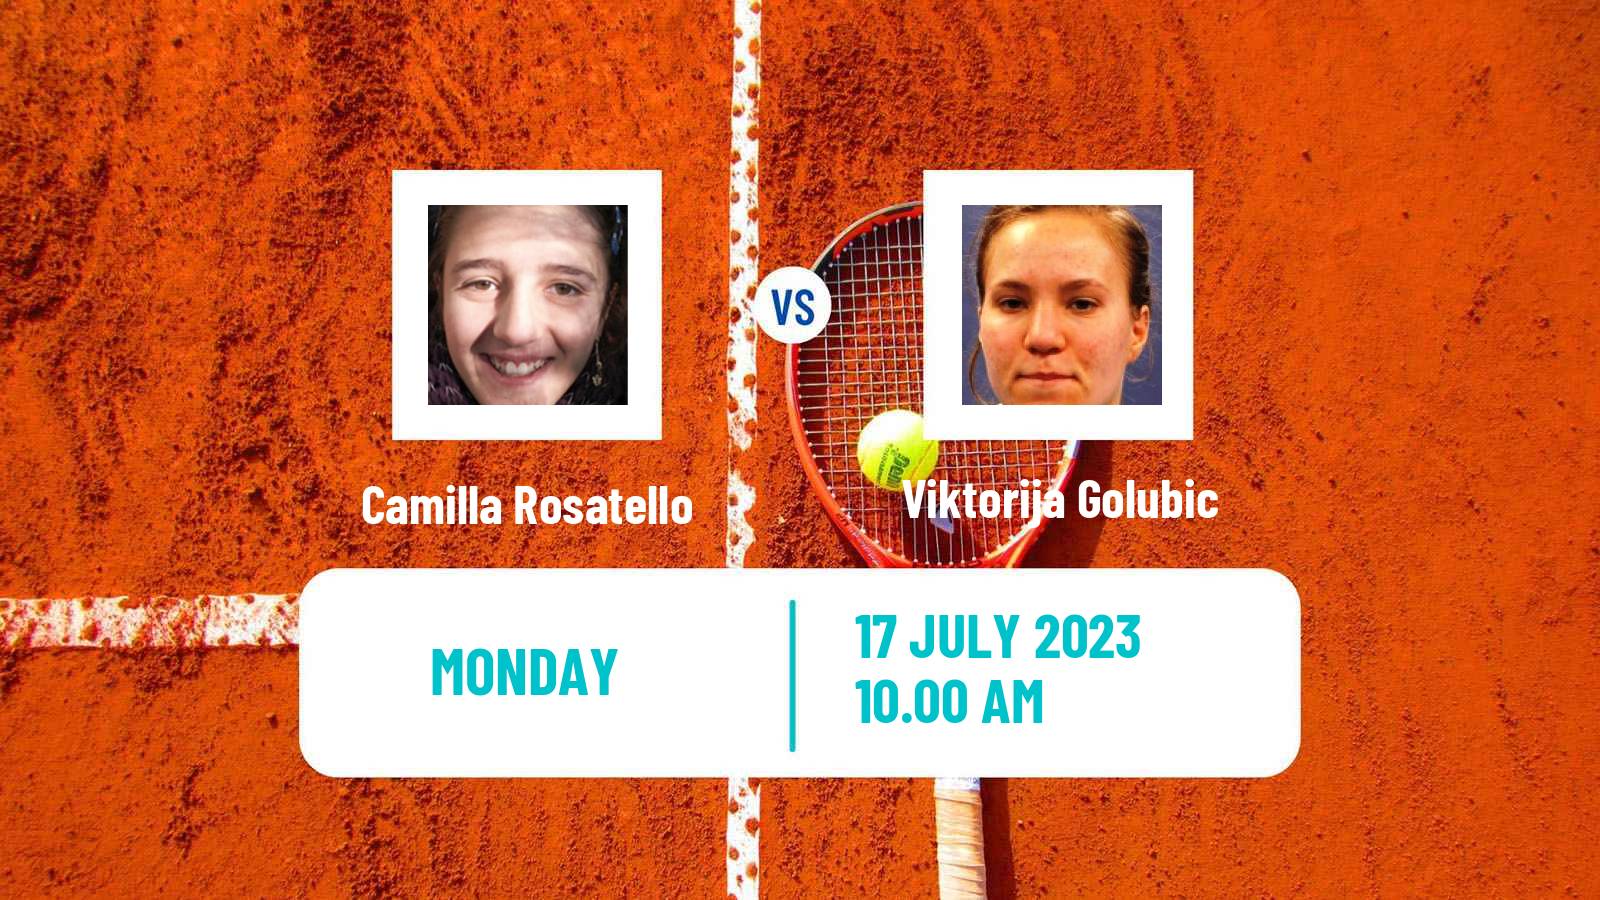 Tennis WTA Palermo Camilla Rosatello - Viktorija Golubic